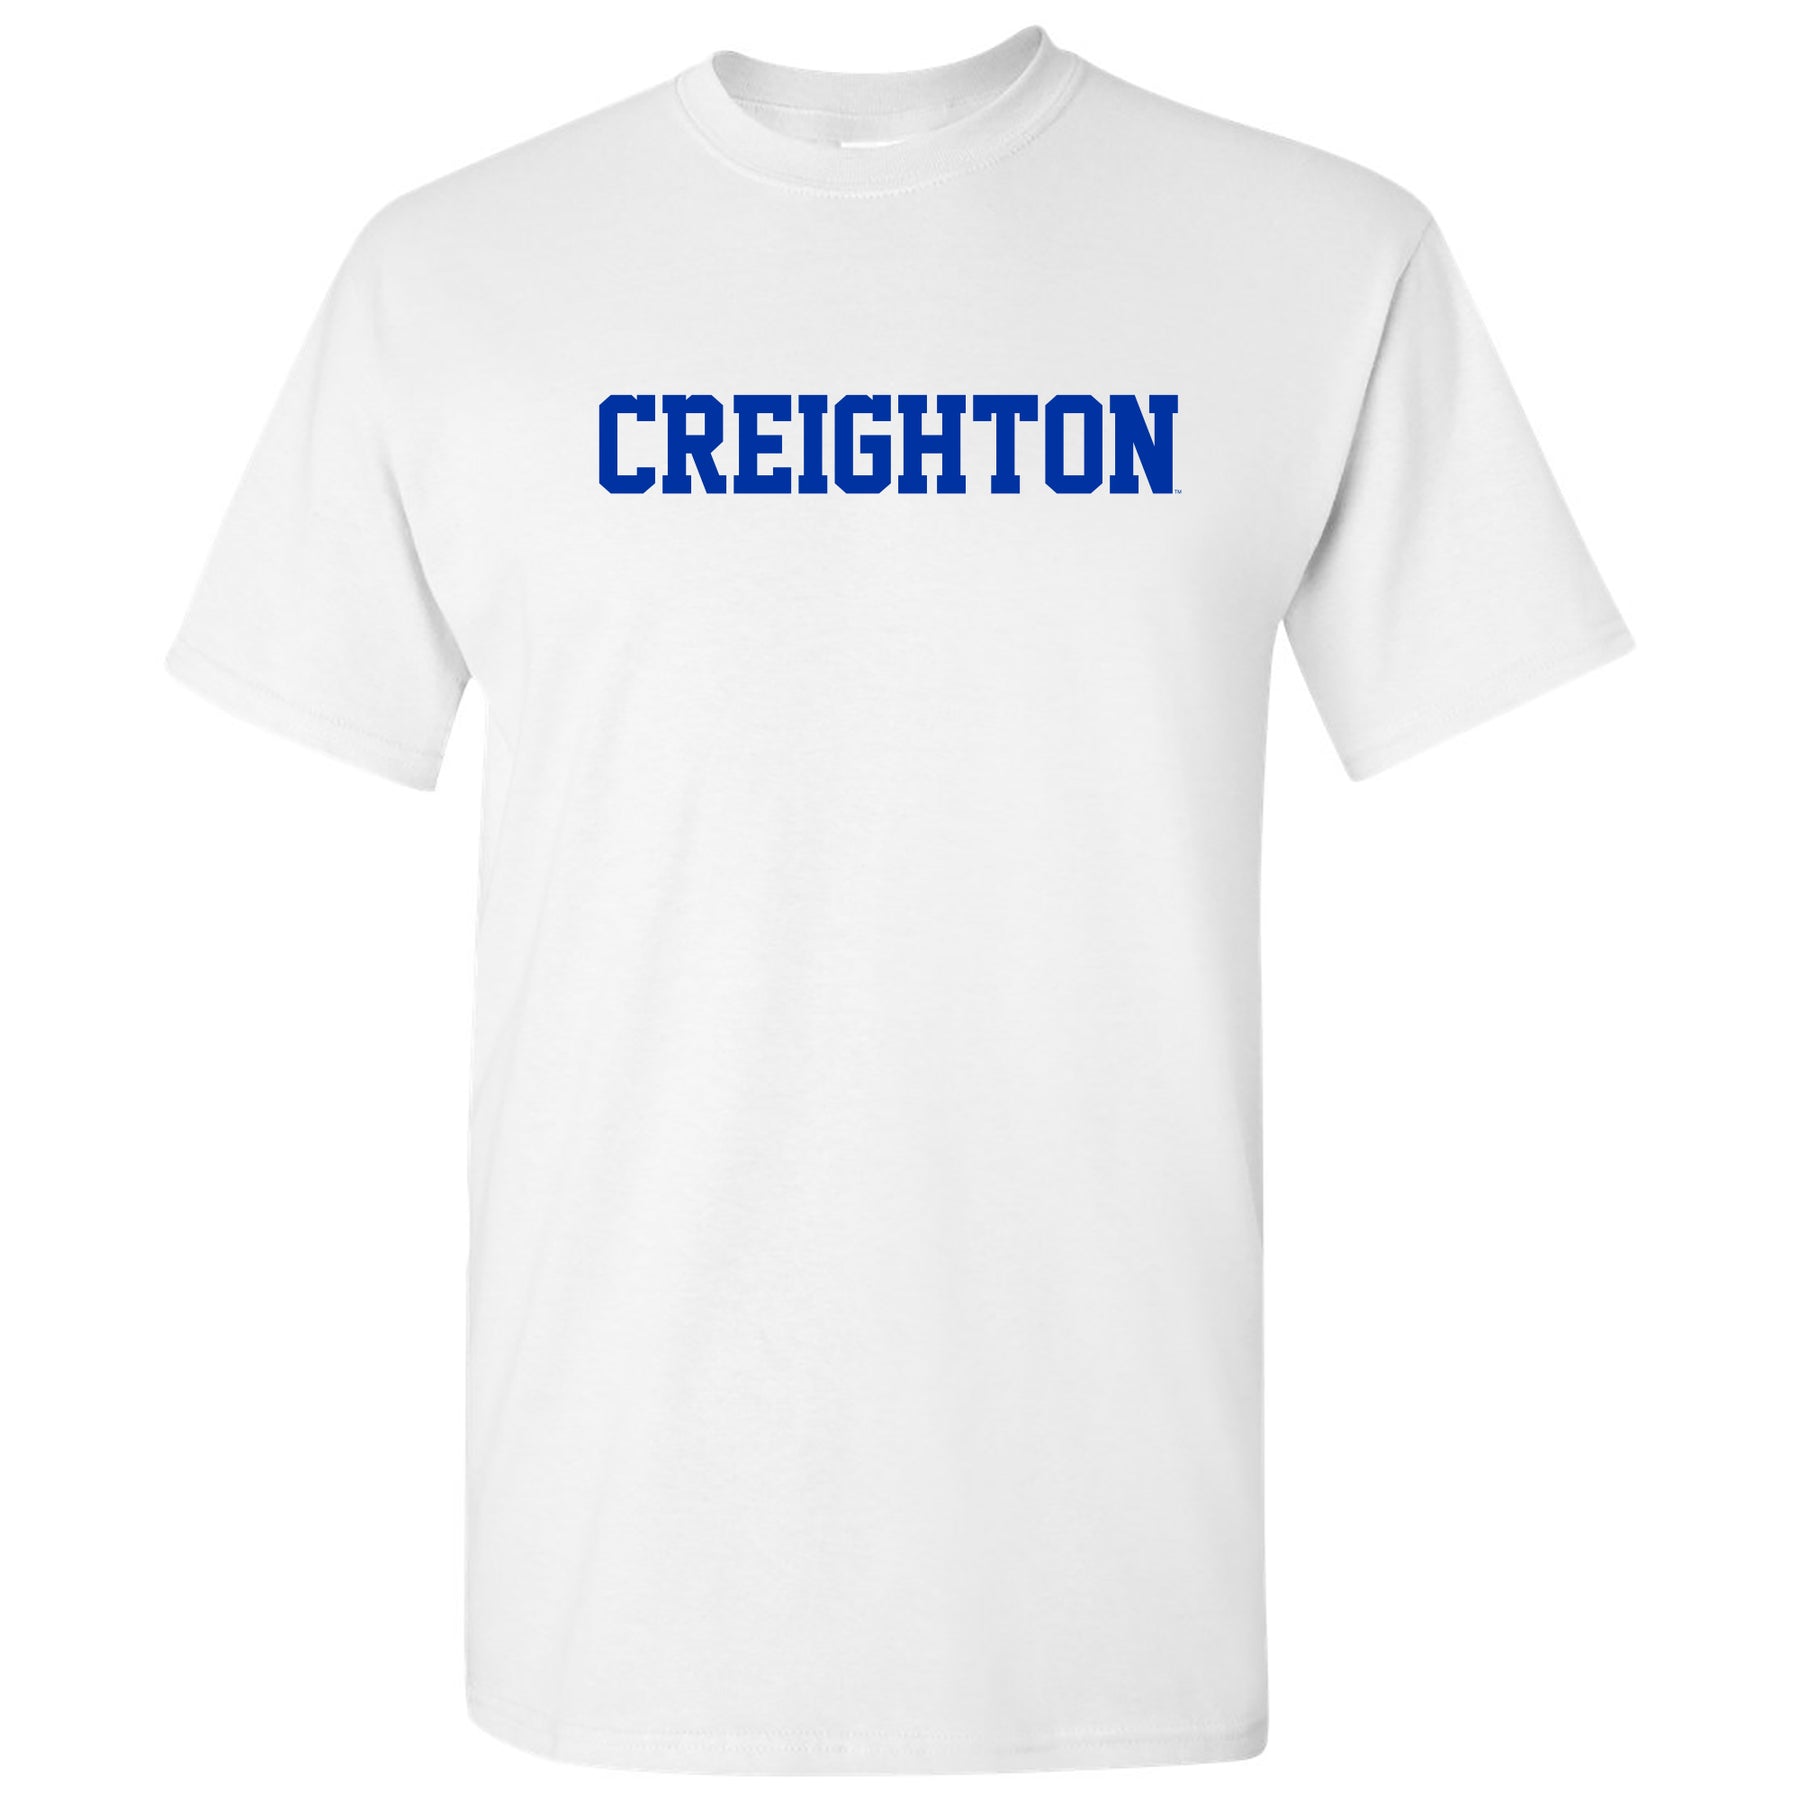 creighton t shirt